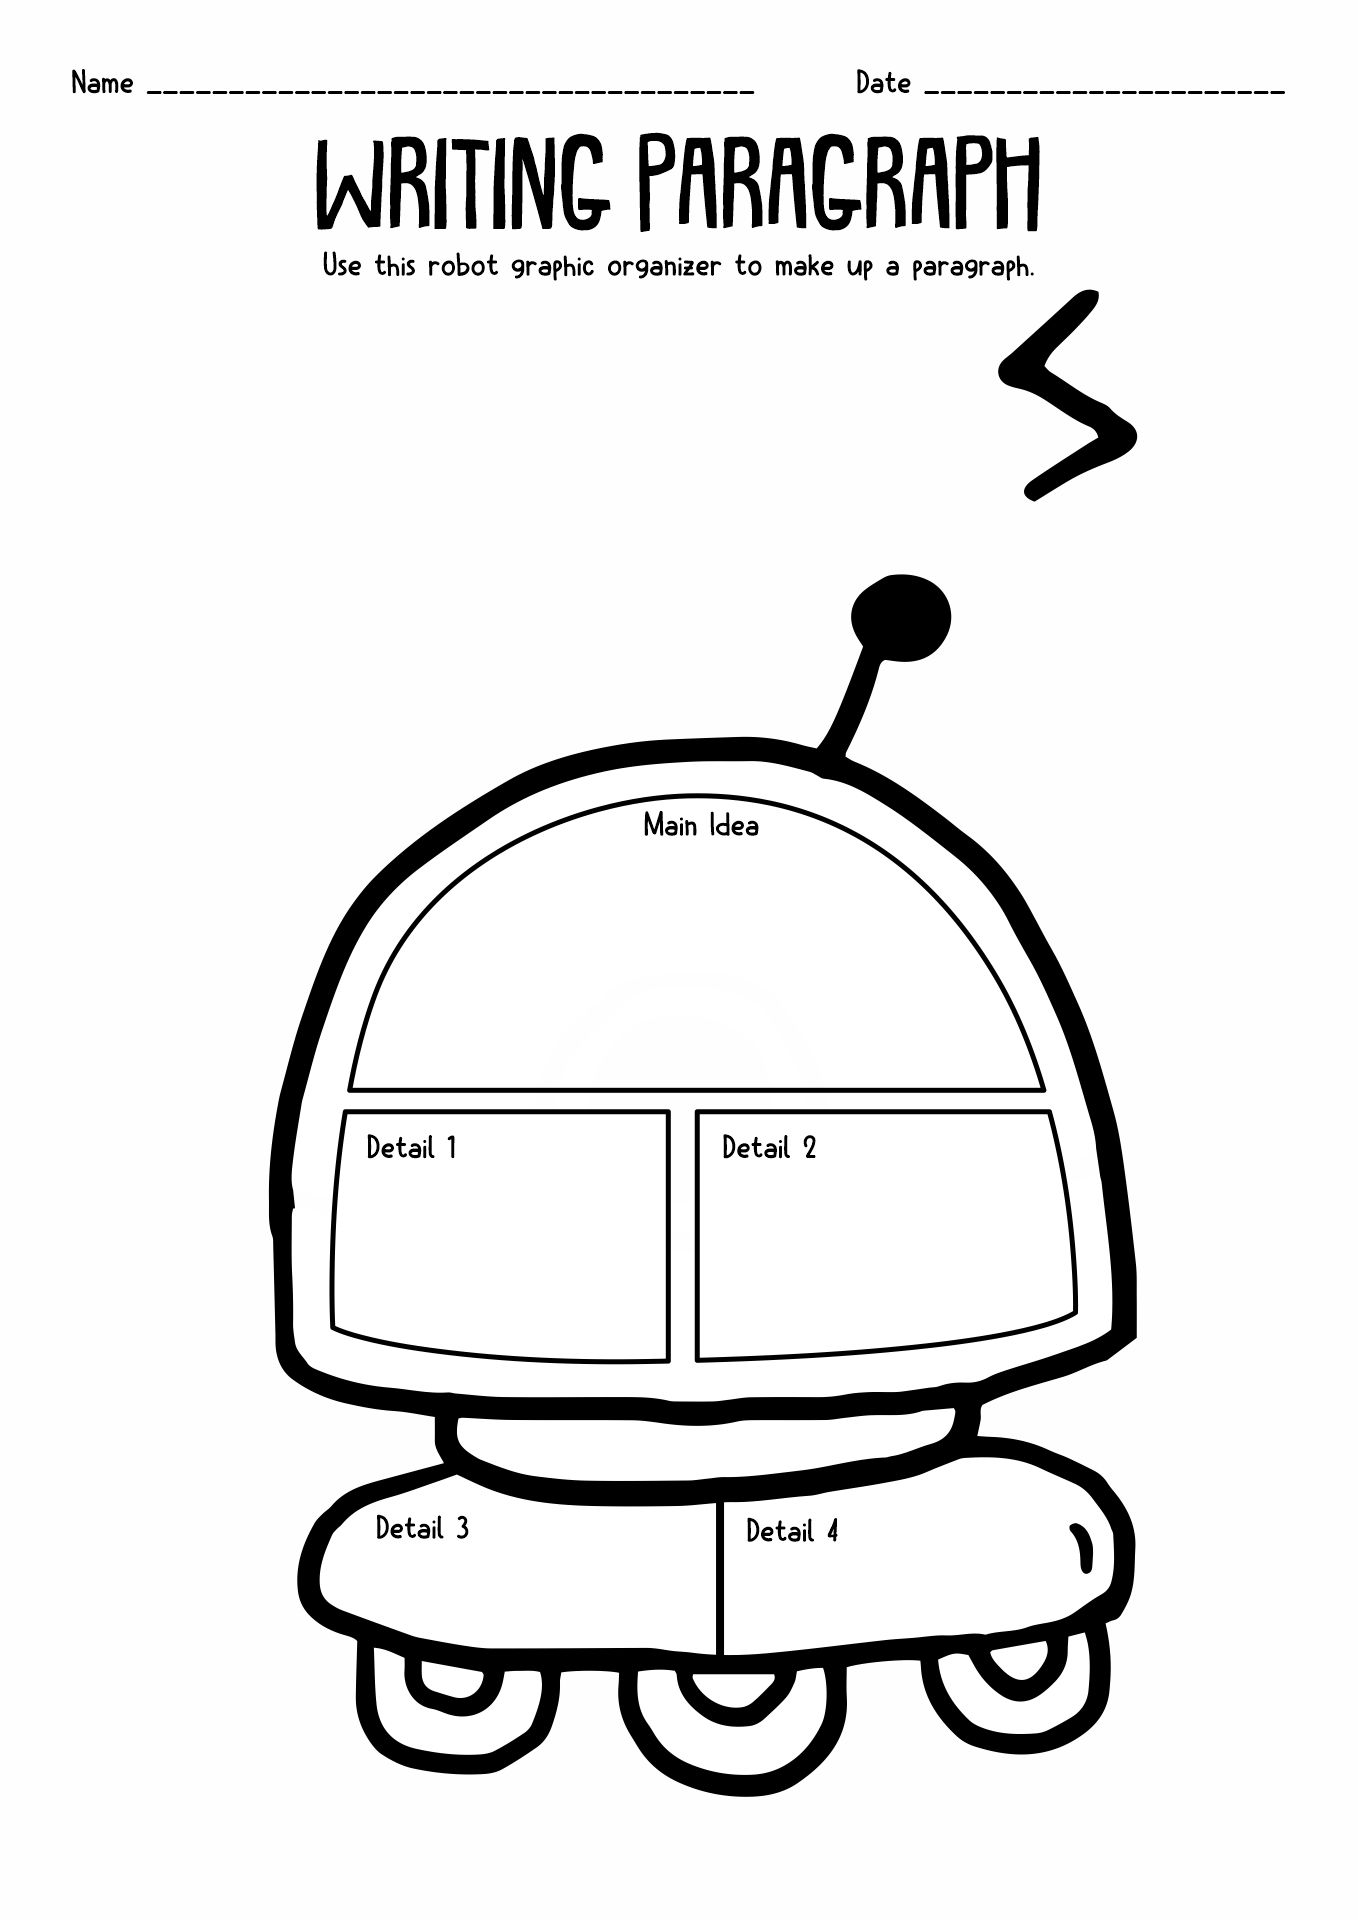 Robot Writing Graphic Organizer Image